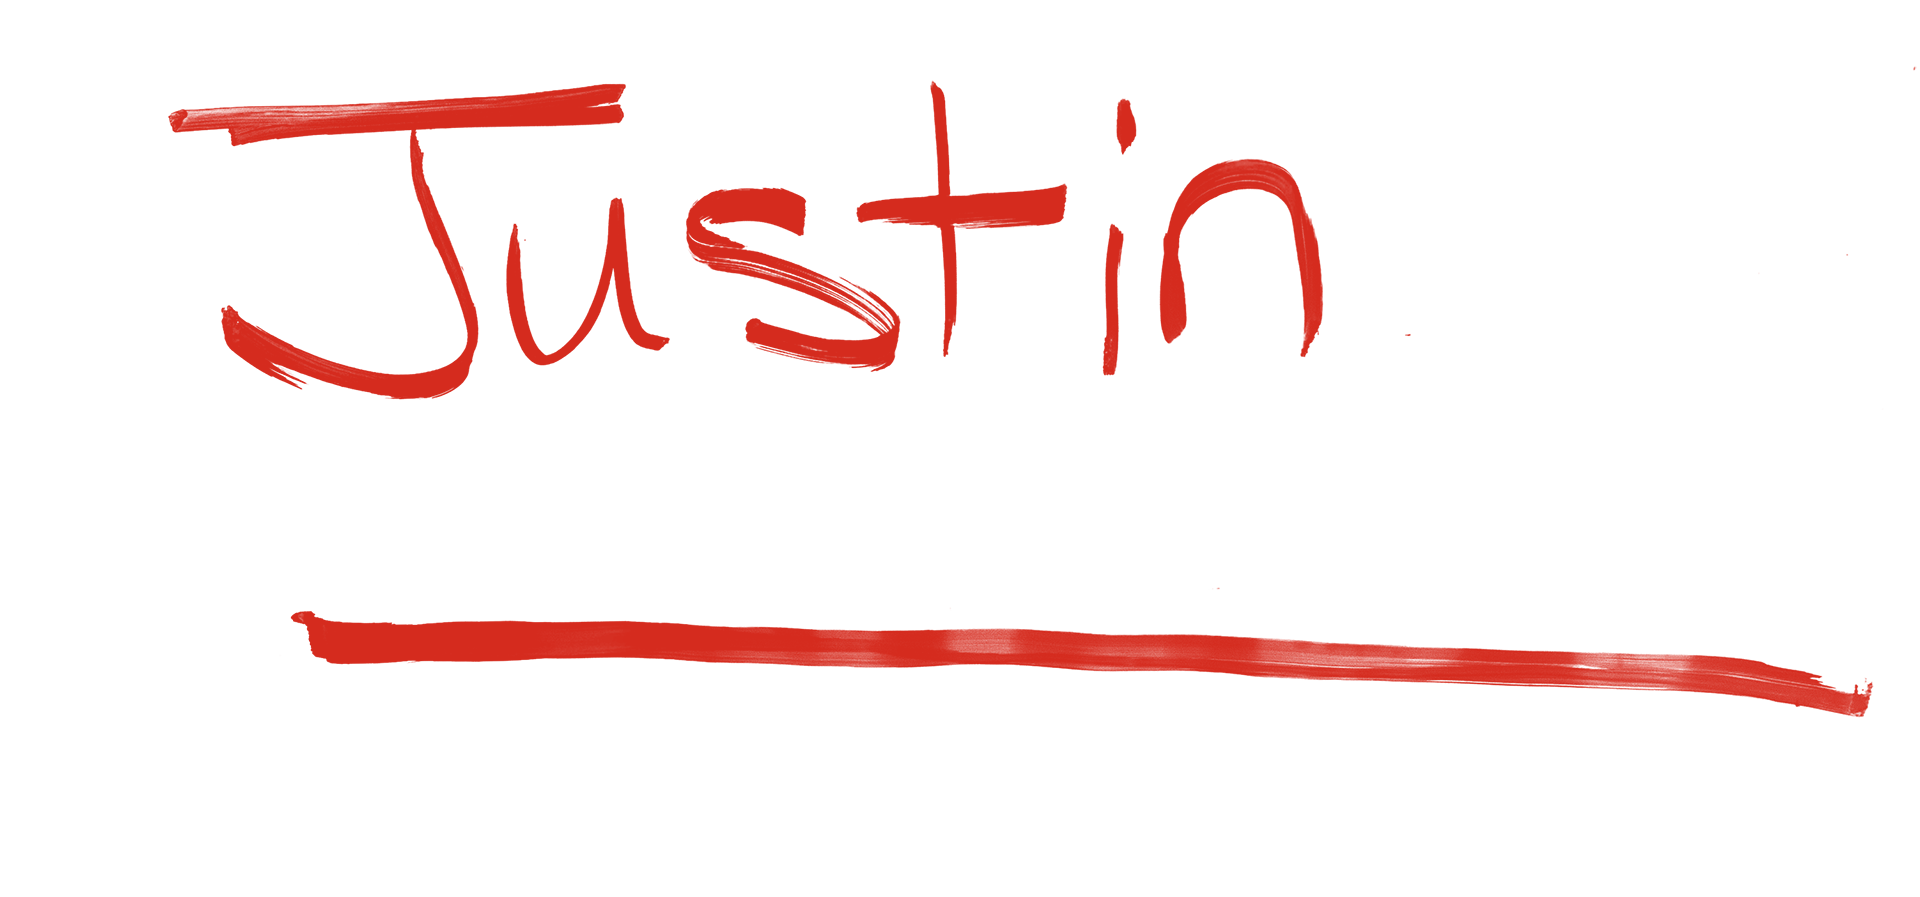 Justin - Angry